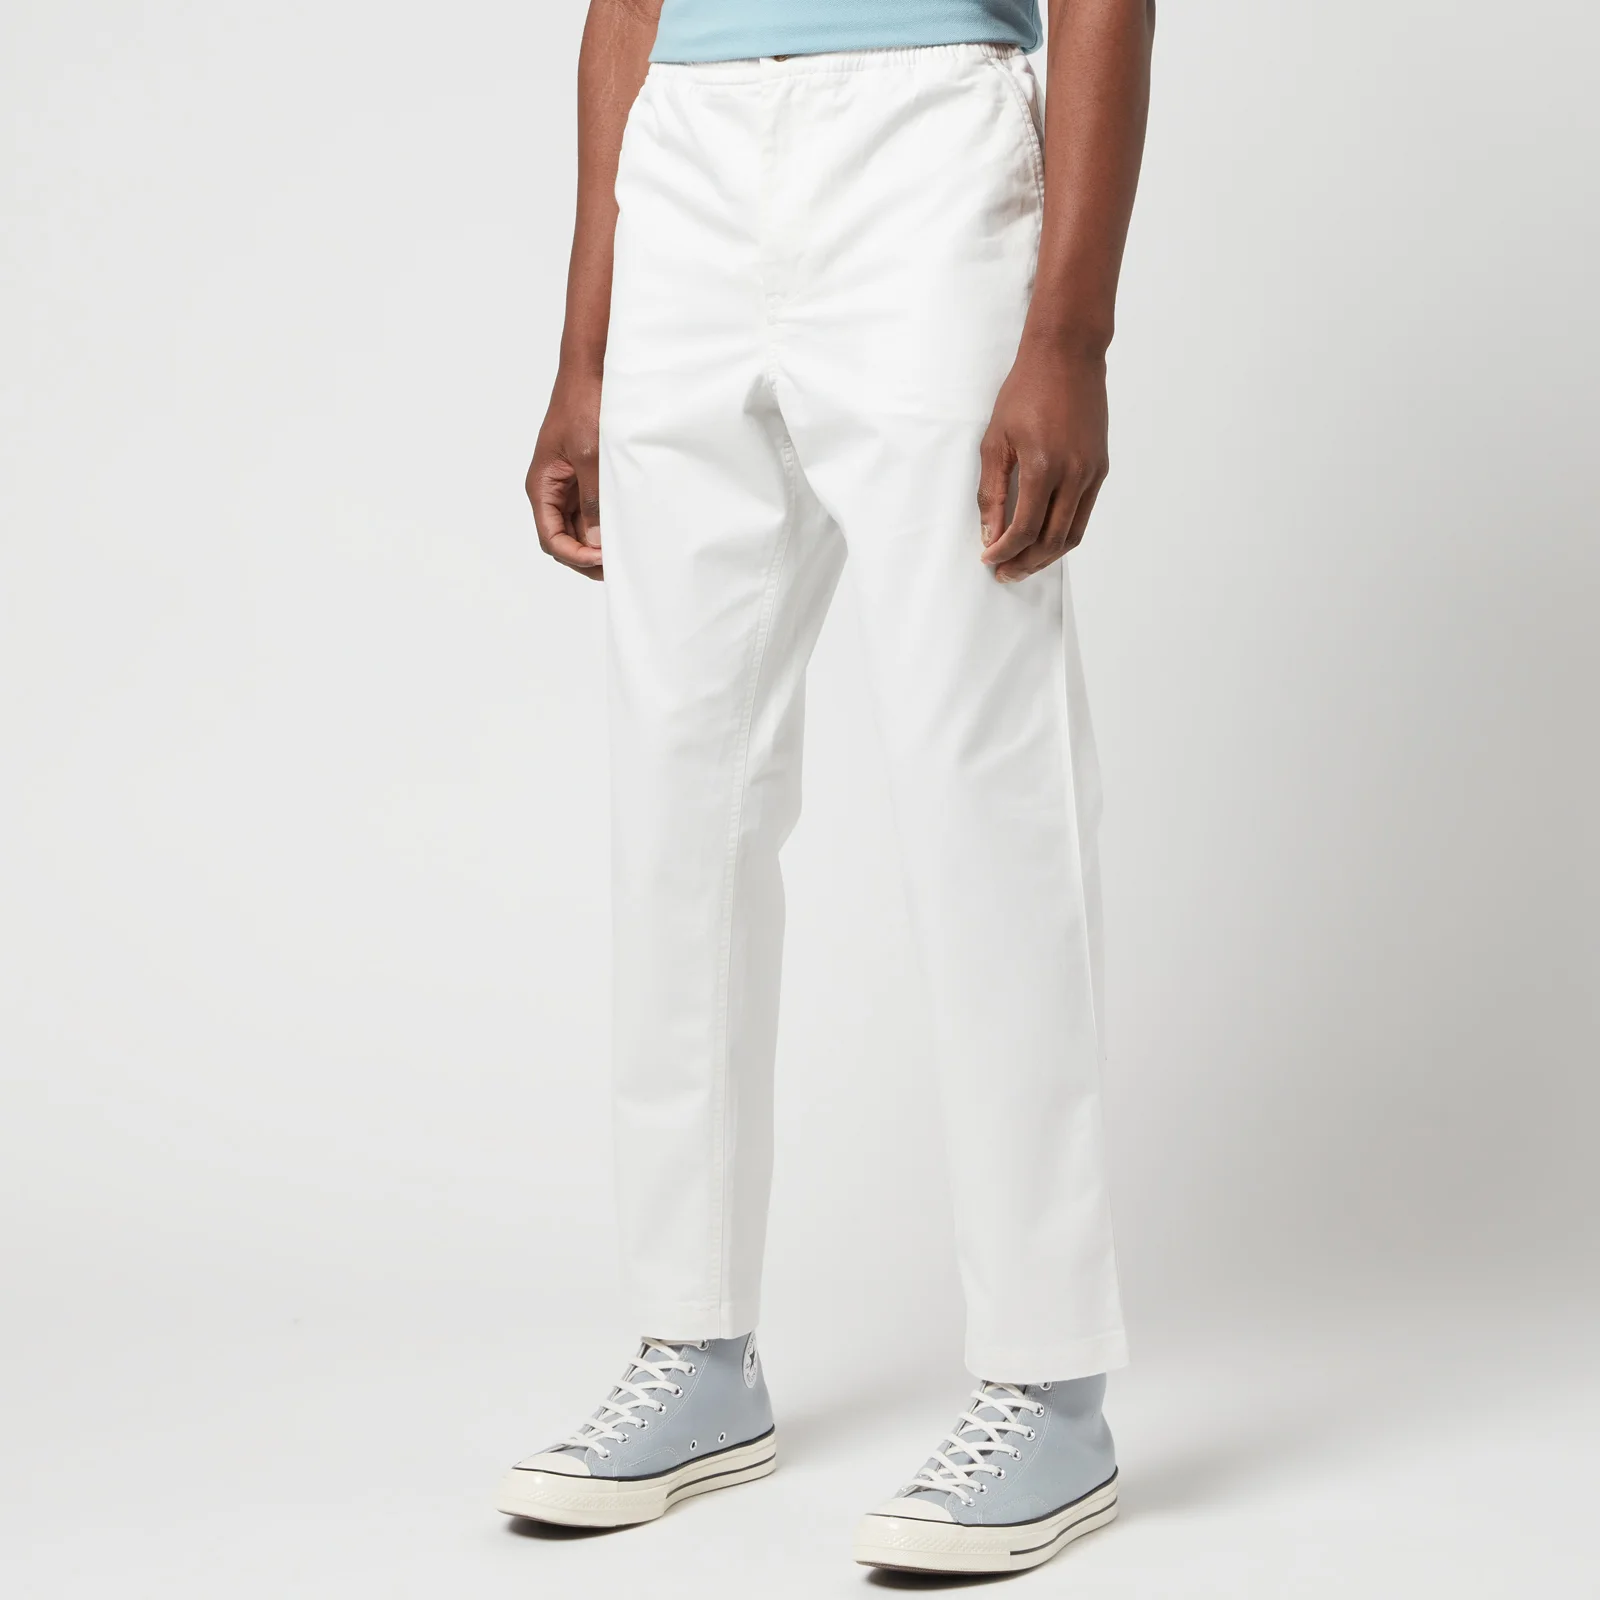 Polo Ralph Lauren Men's Flat Front Prepster Pants - Deckwash White Image 1